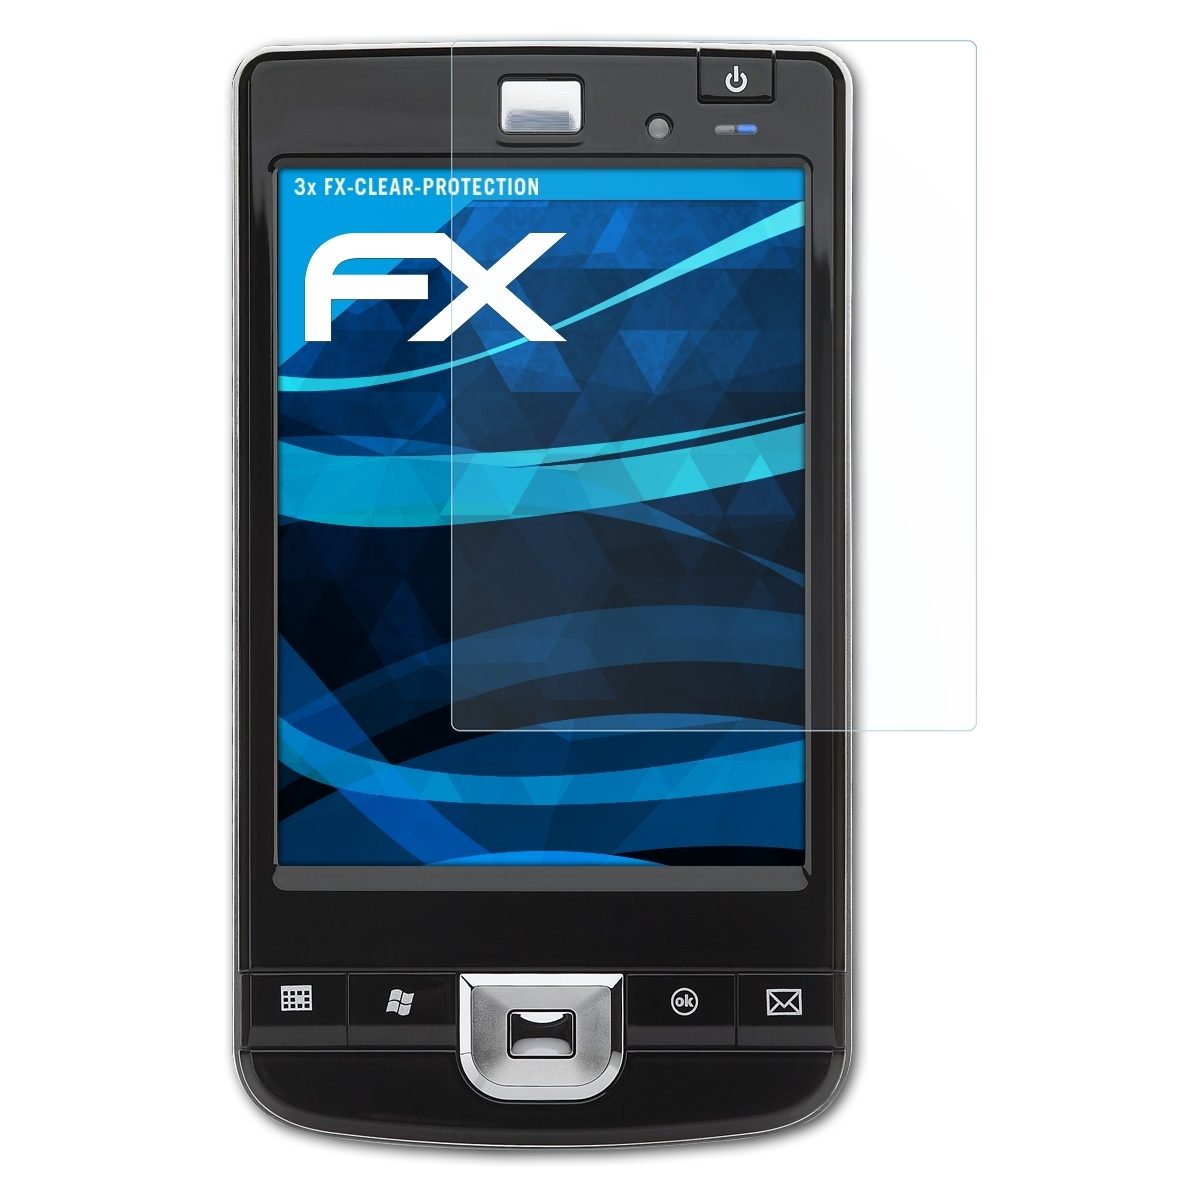 3x HP FX-Clear iPaq Displayschutz(für ATFOLIX 214)